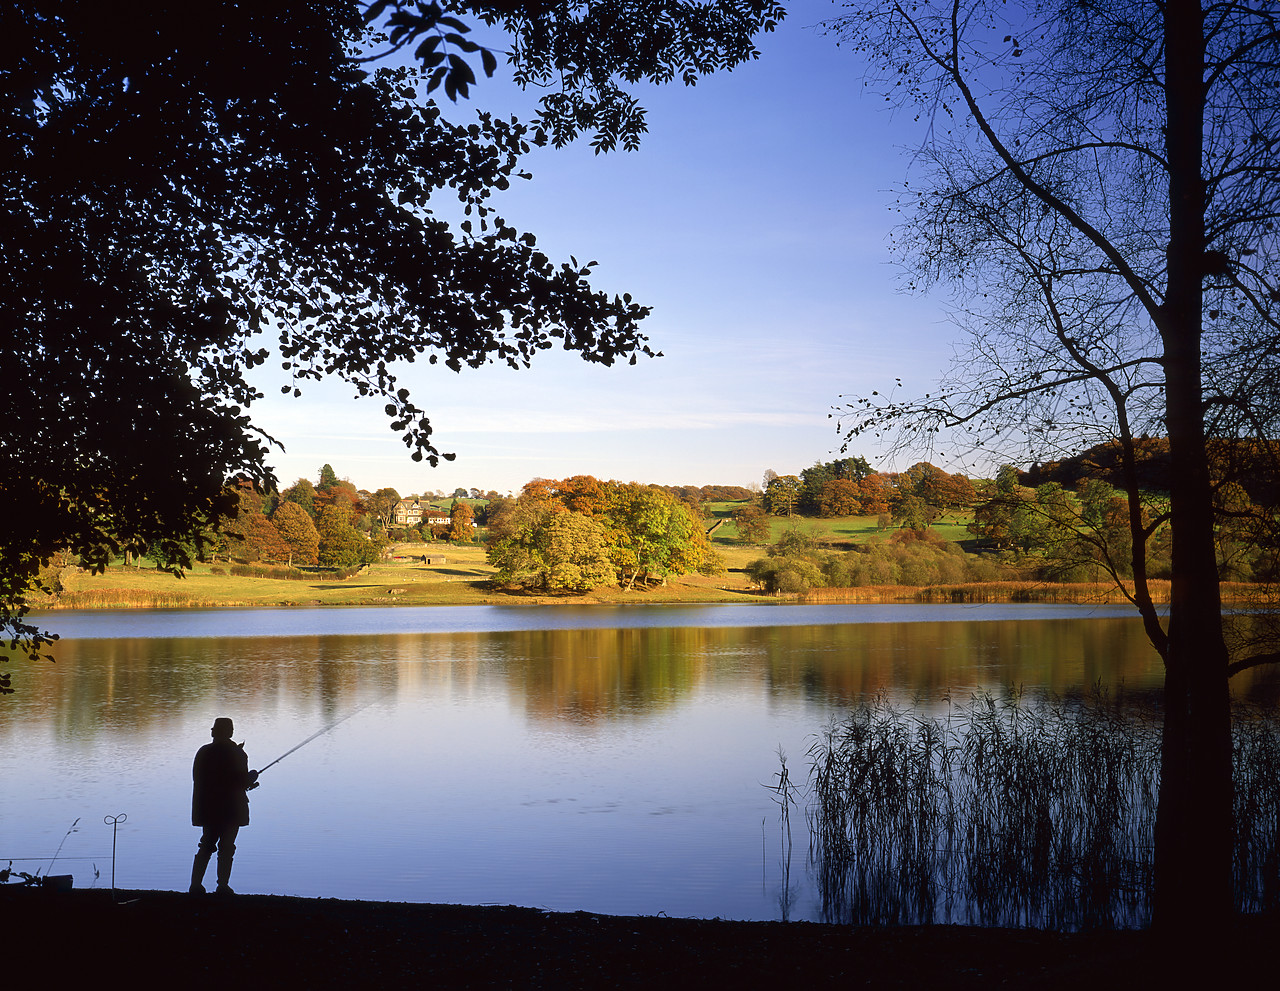 #970468-1 - Fisherman at Esthwaite Water, Lake District National Park, Cumbria, England